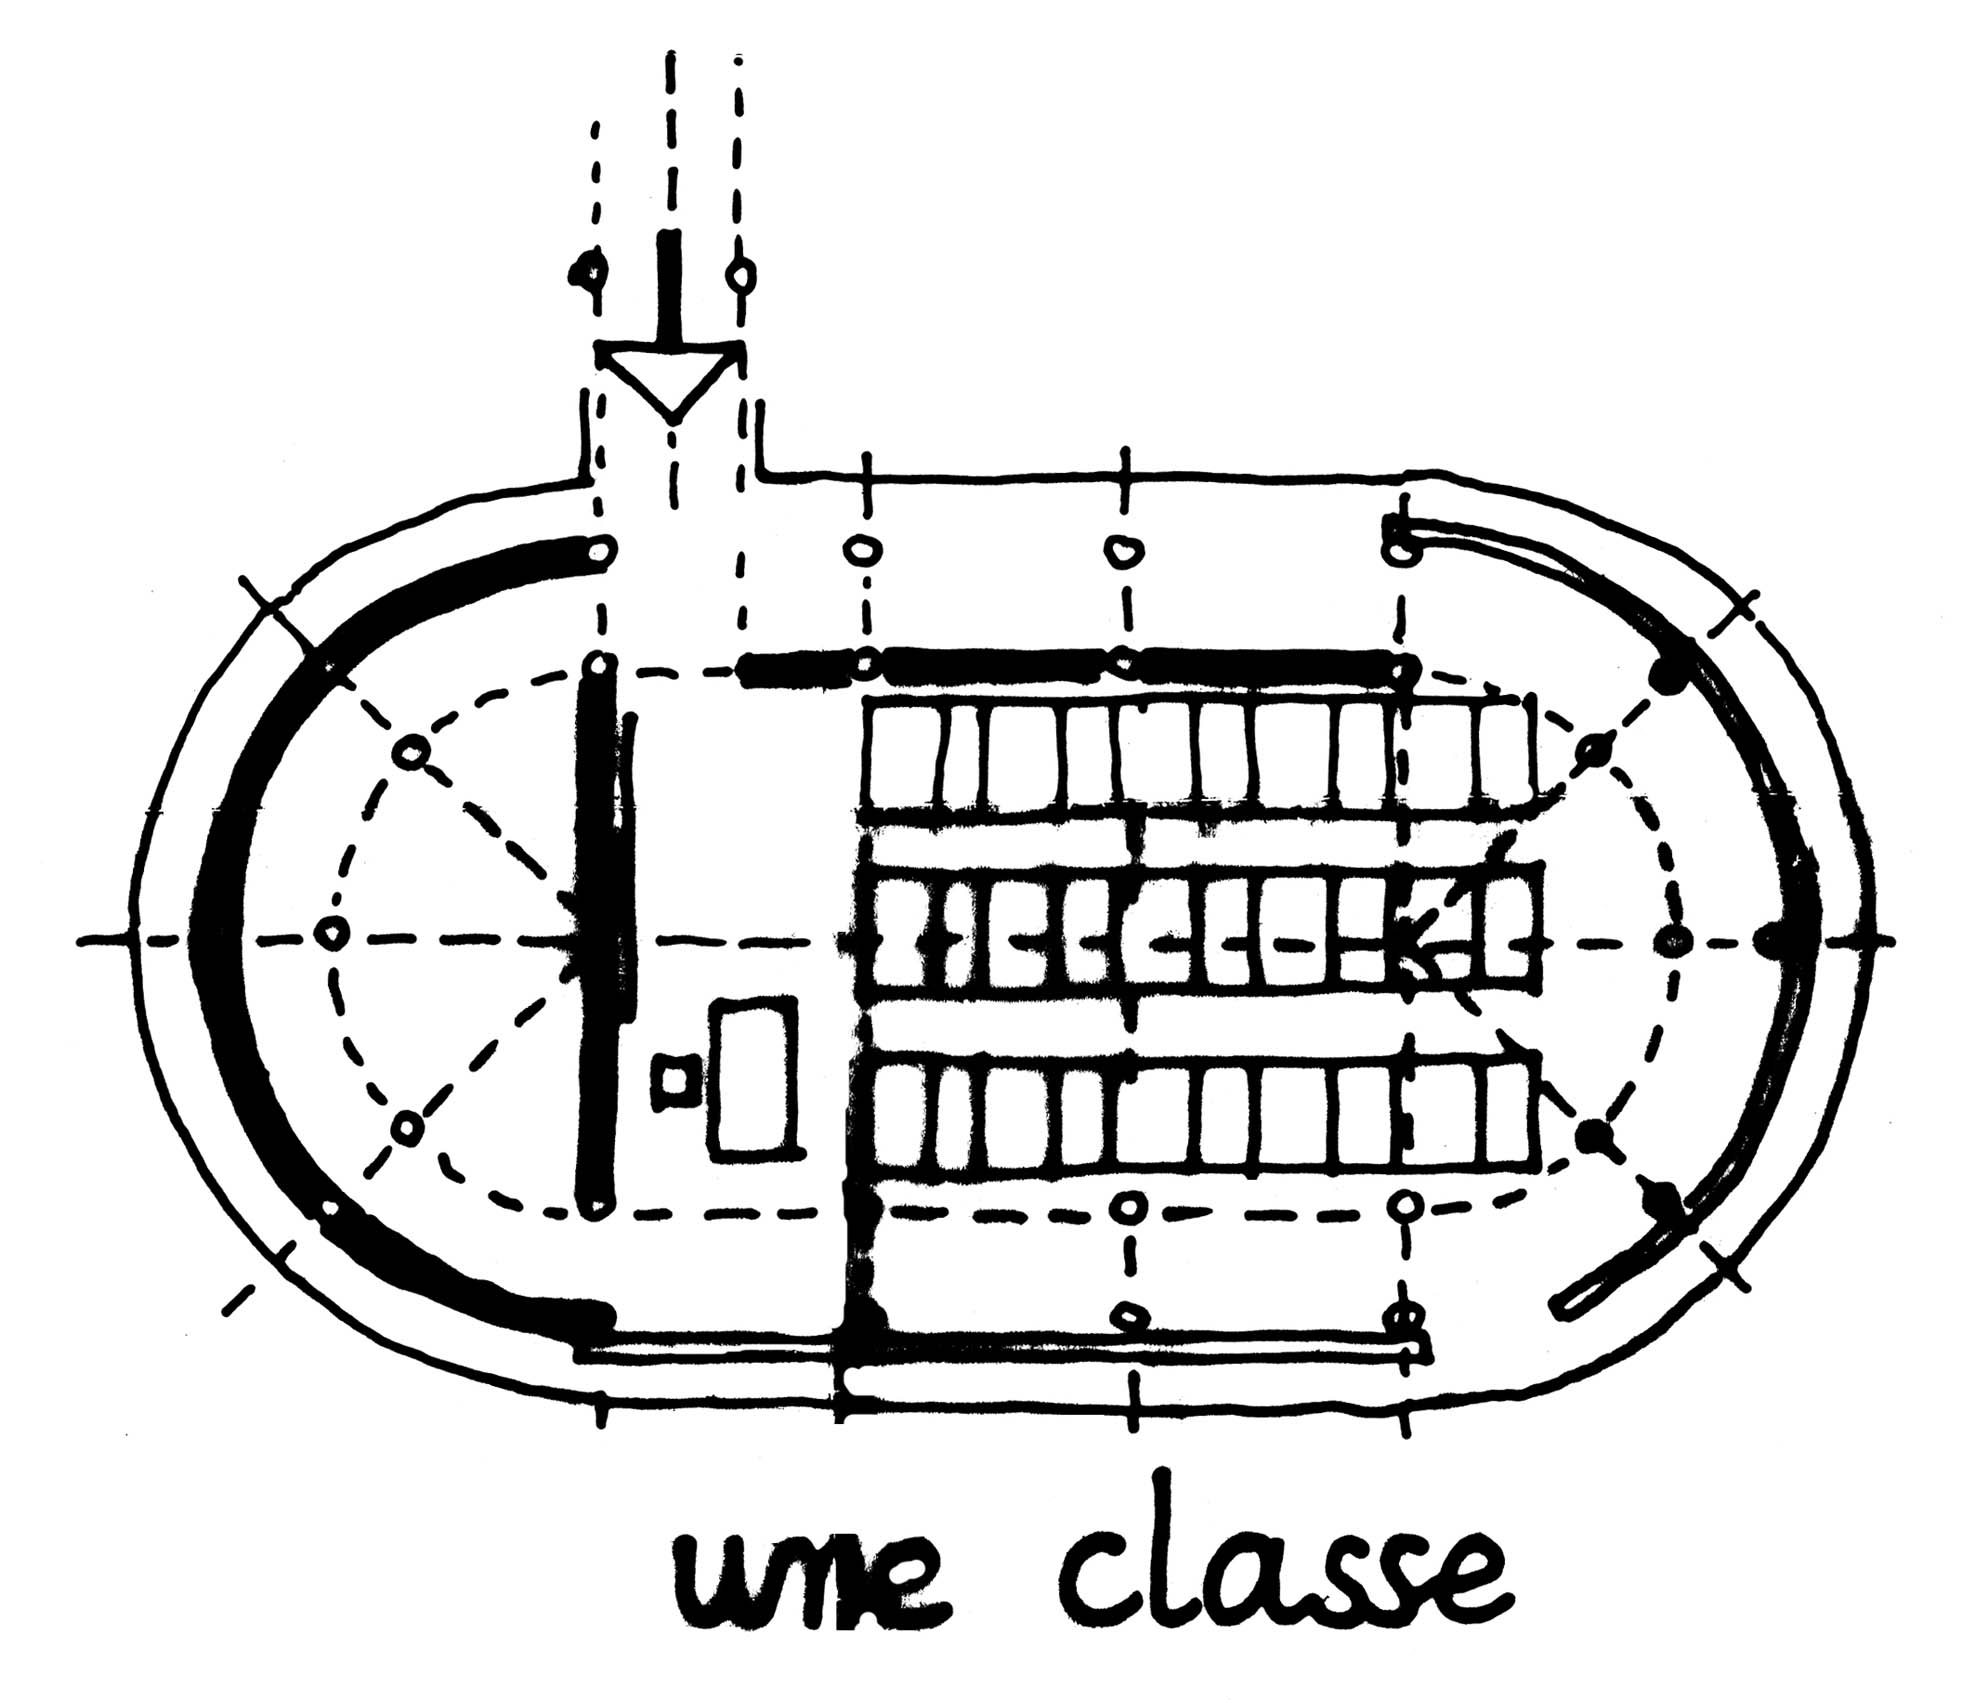 Plan, class layout